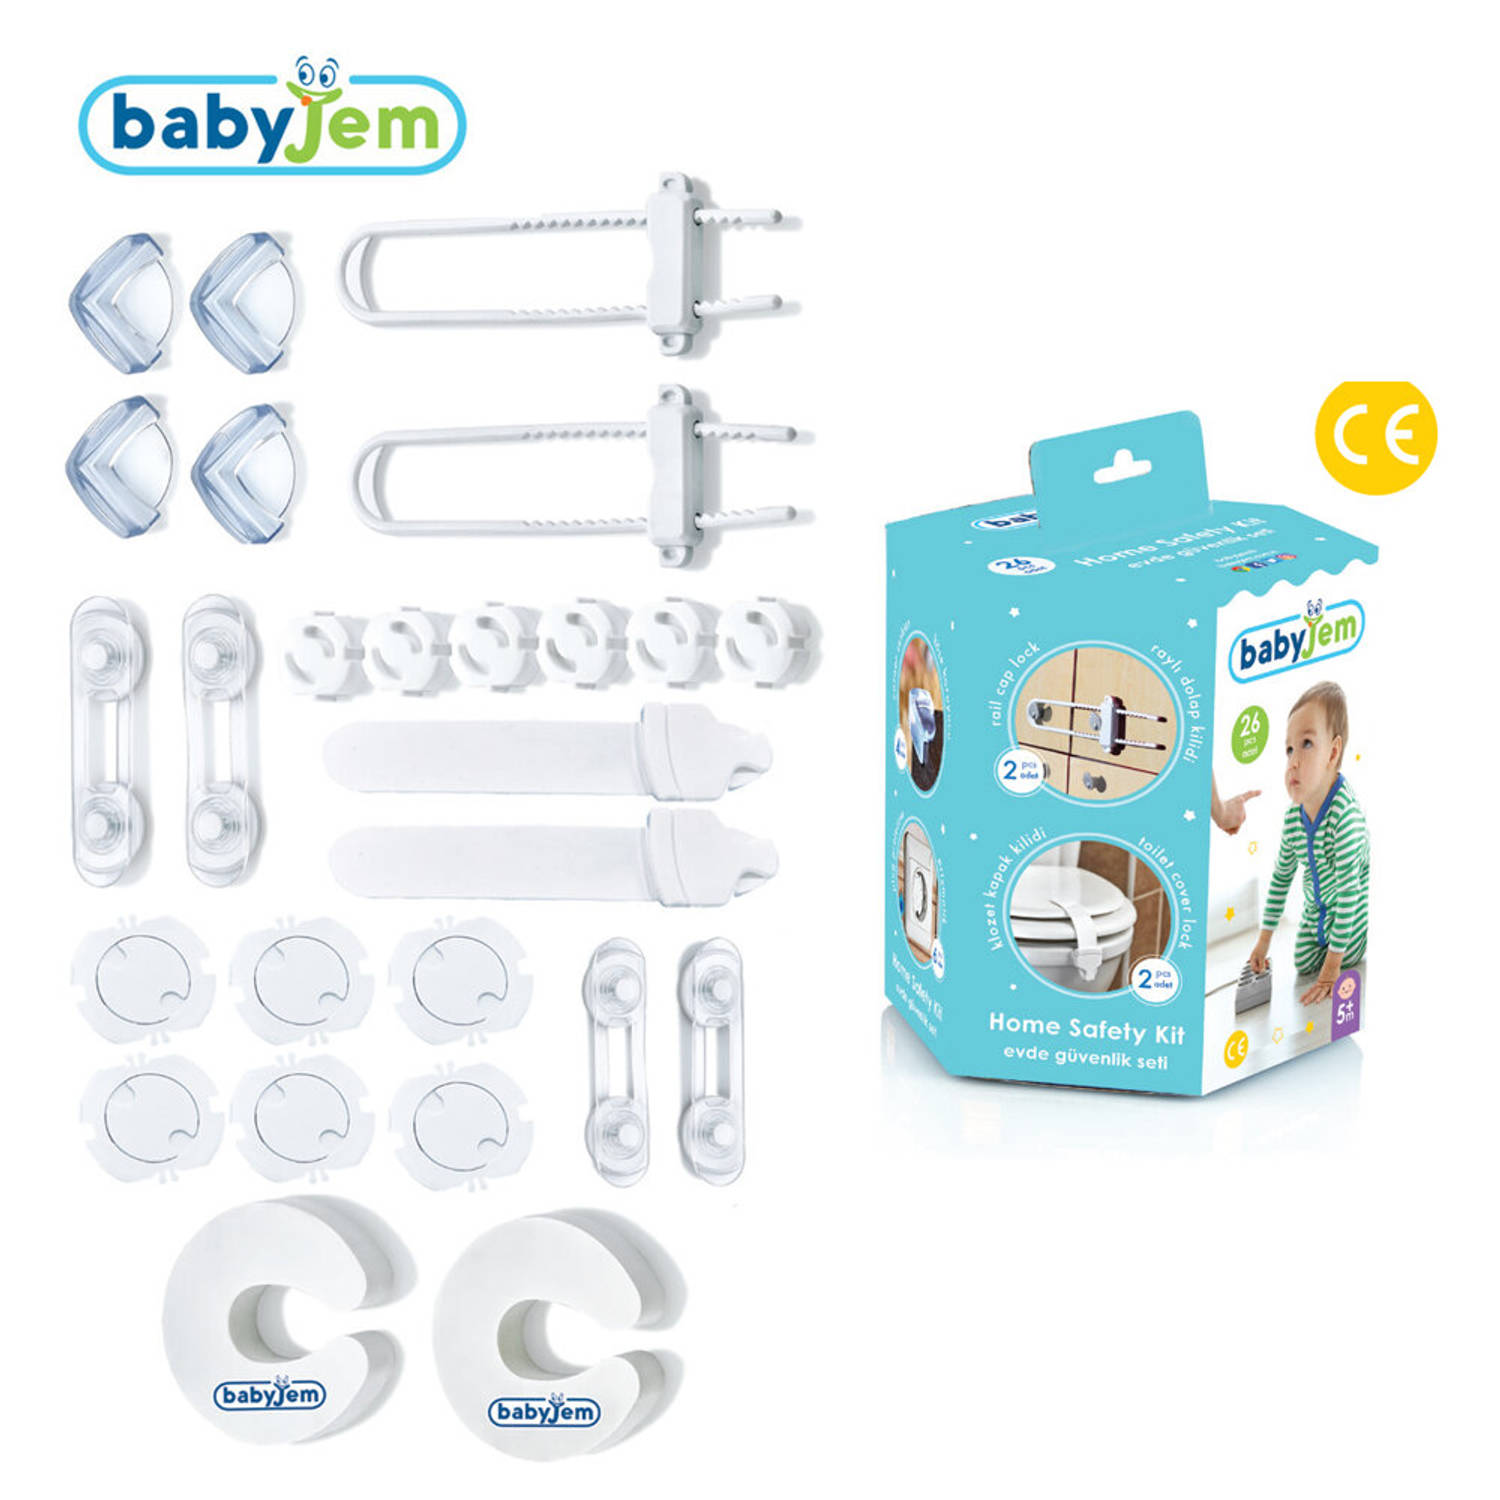 Babyjem-Beveiligingsset-26-delig- Baby &Kind set-Beschermers